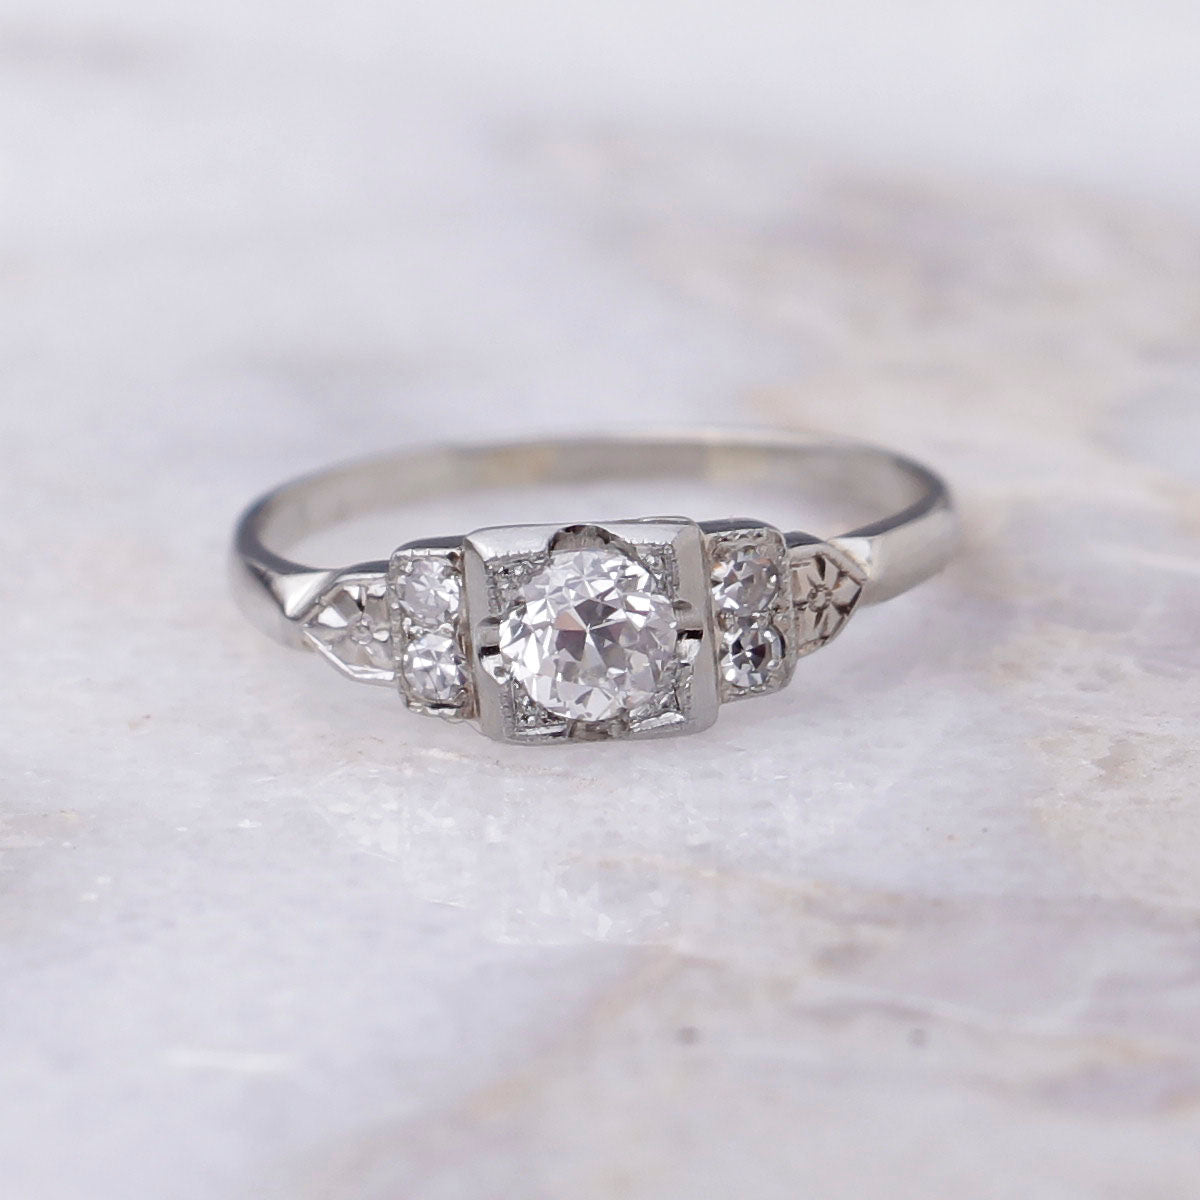 Circa 1930s Engagement ring #VR190214-1